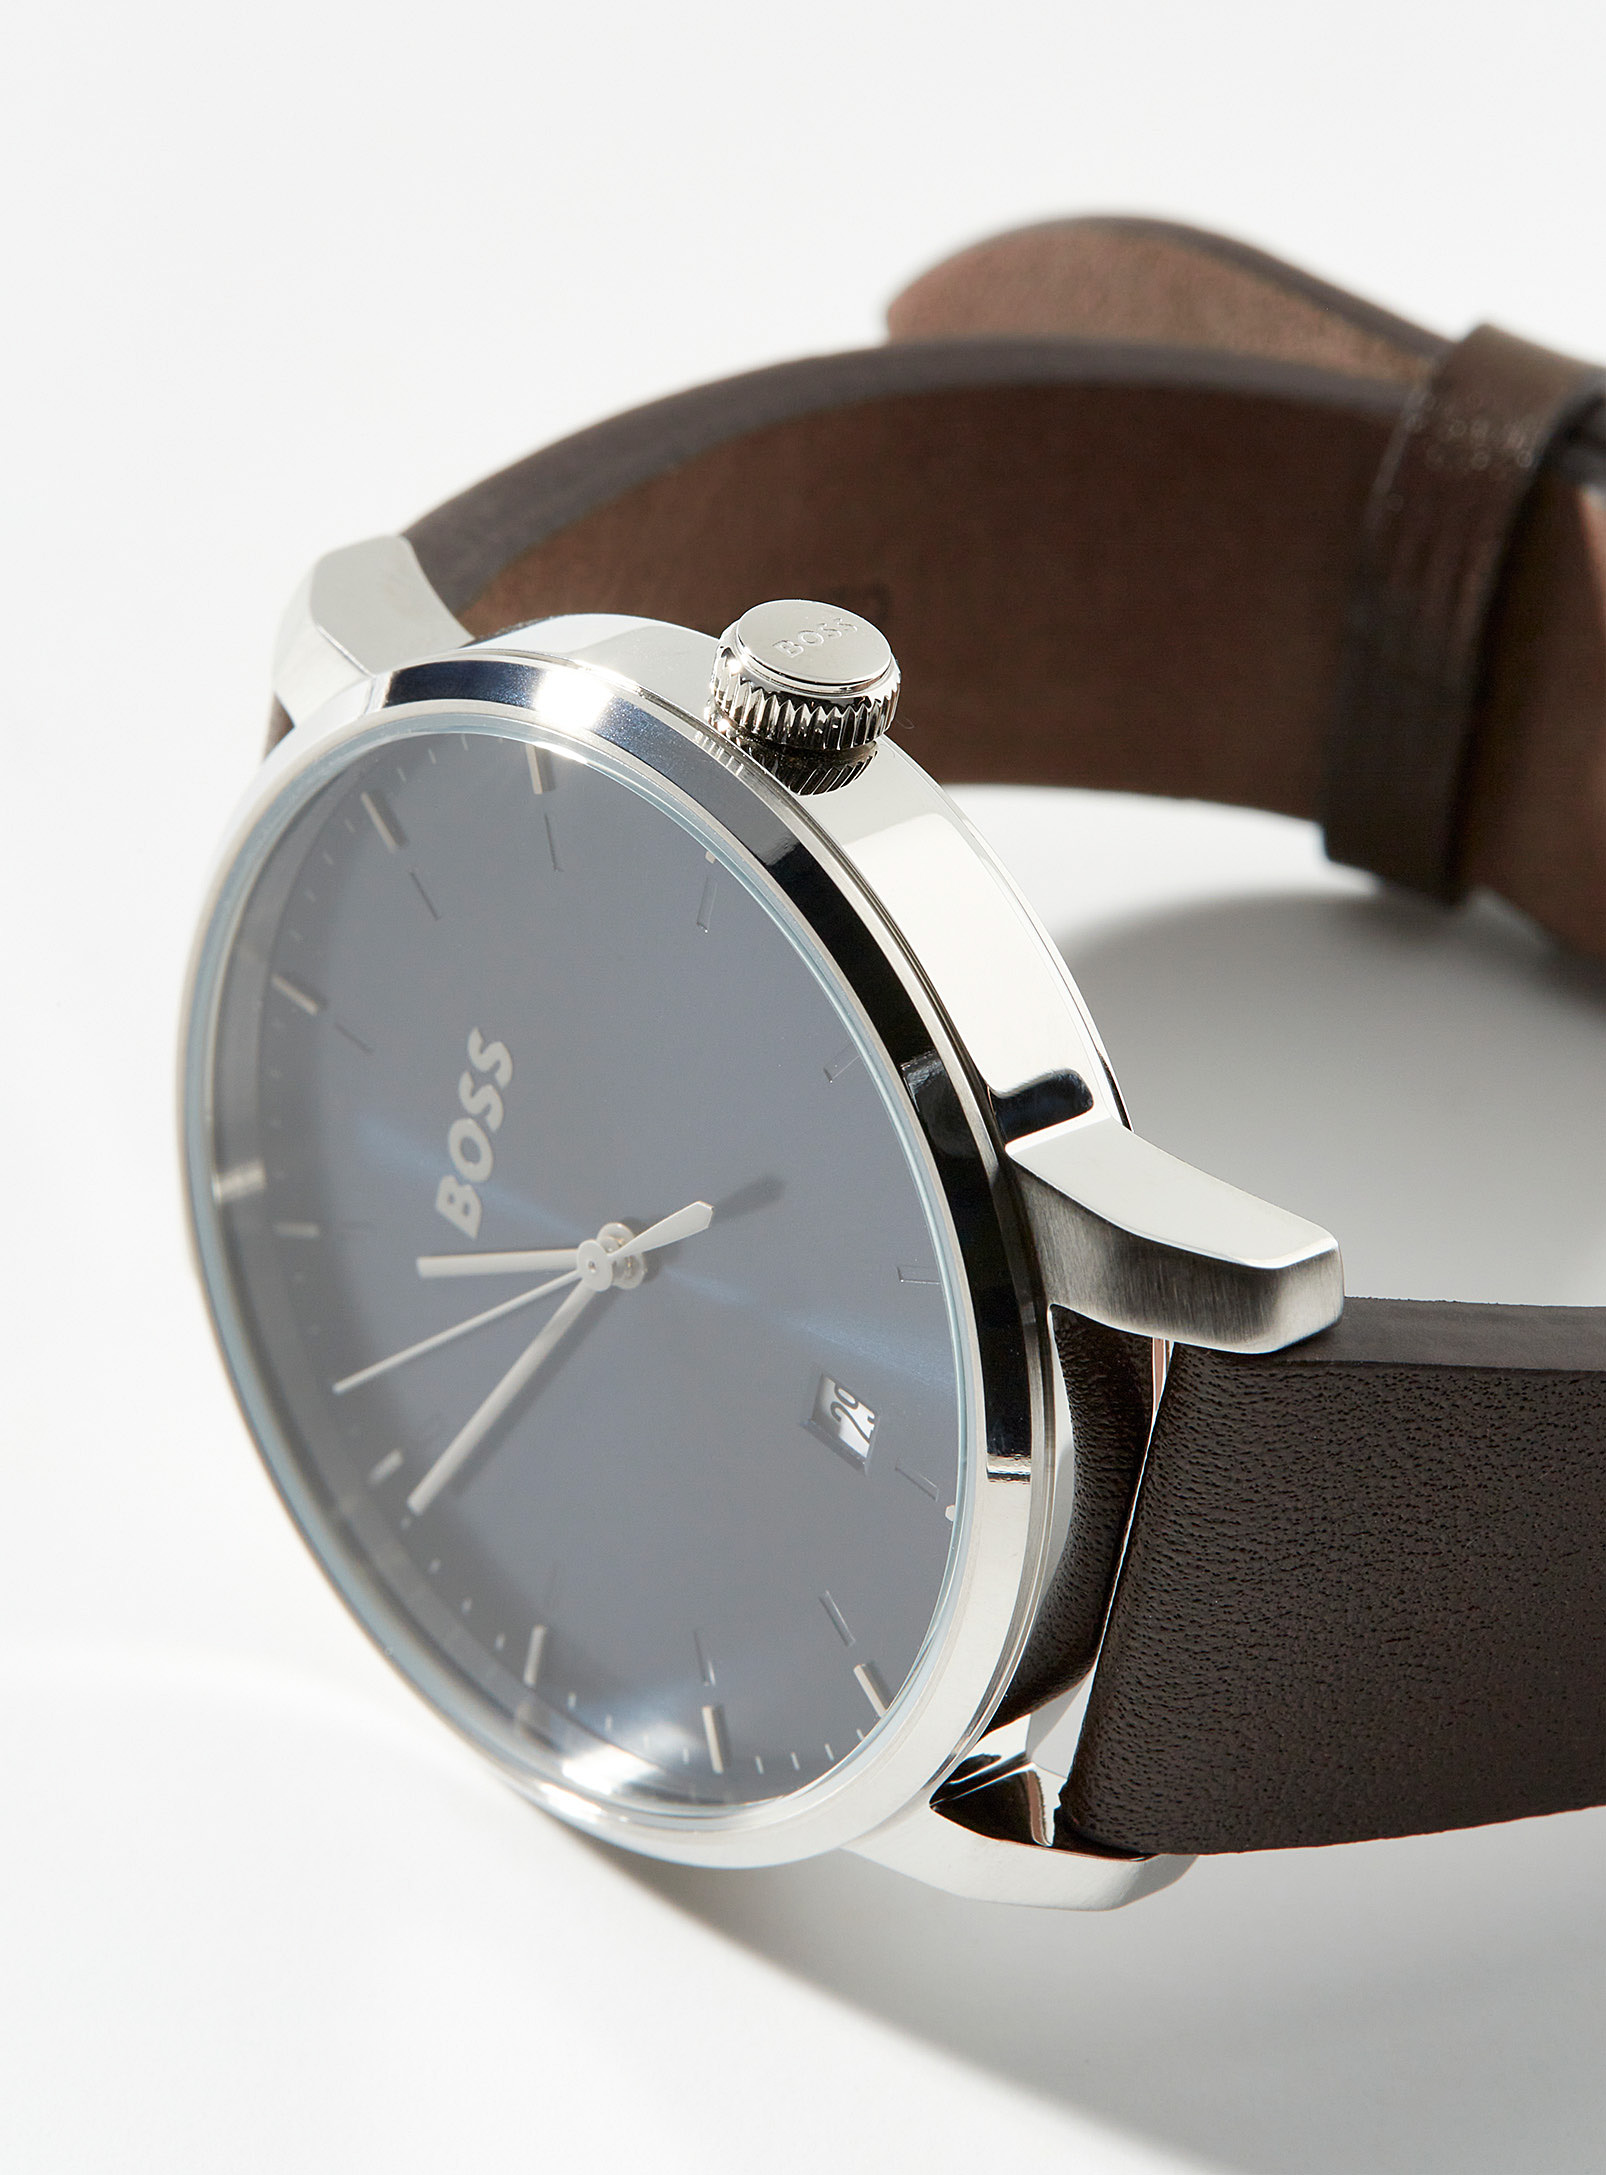 BOSS - La montre bracelet cuir cadran bleu marine